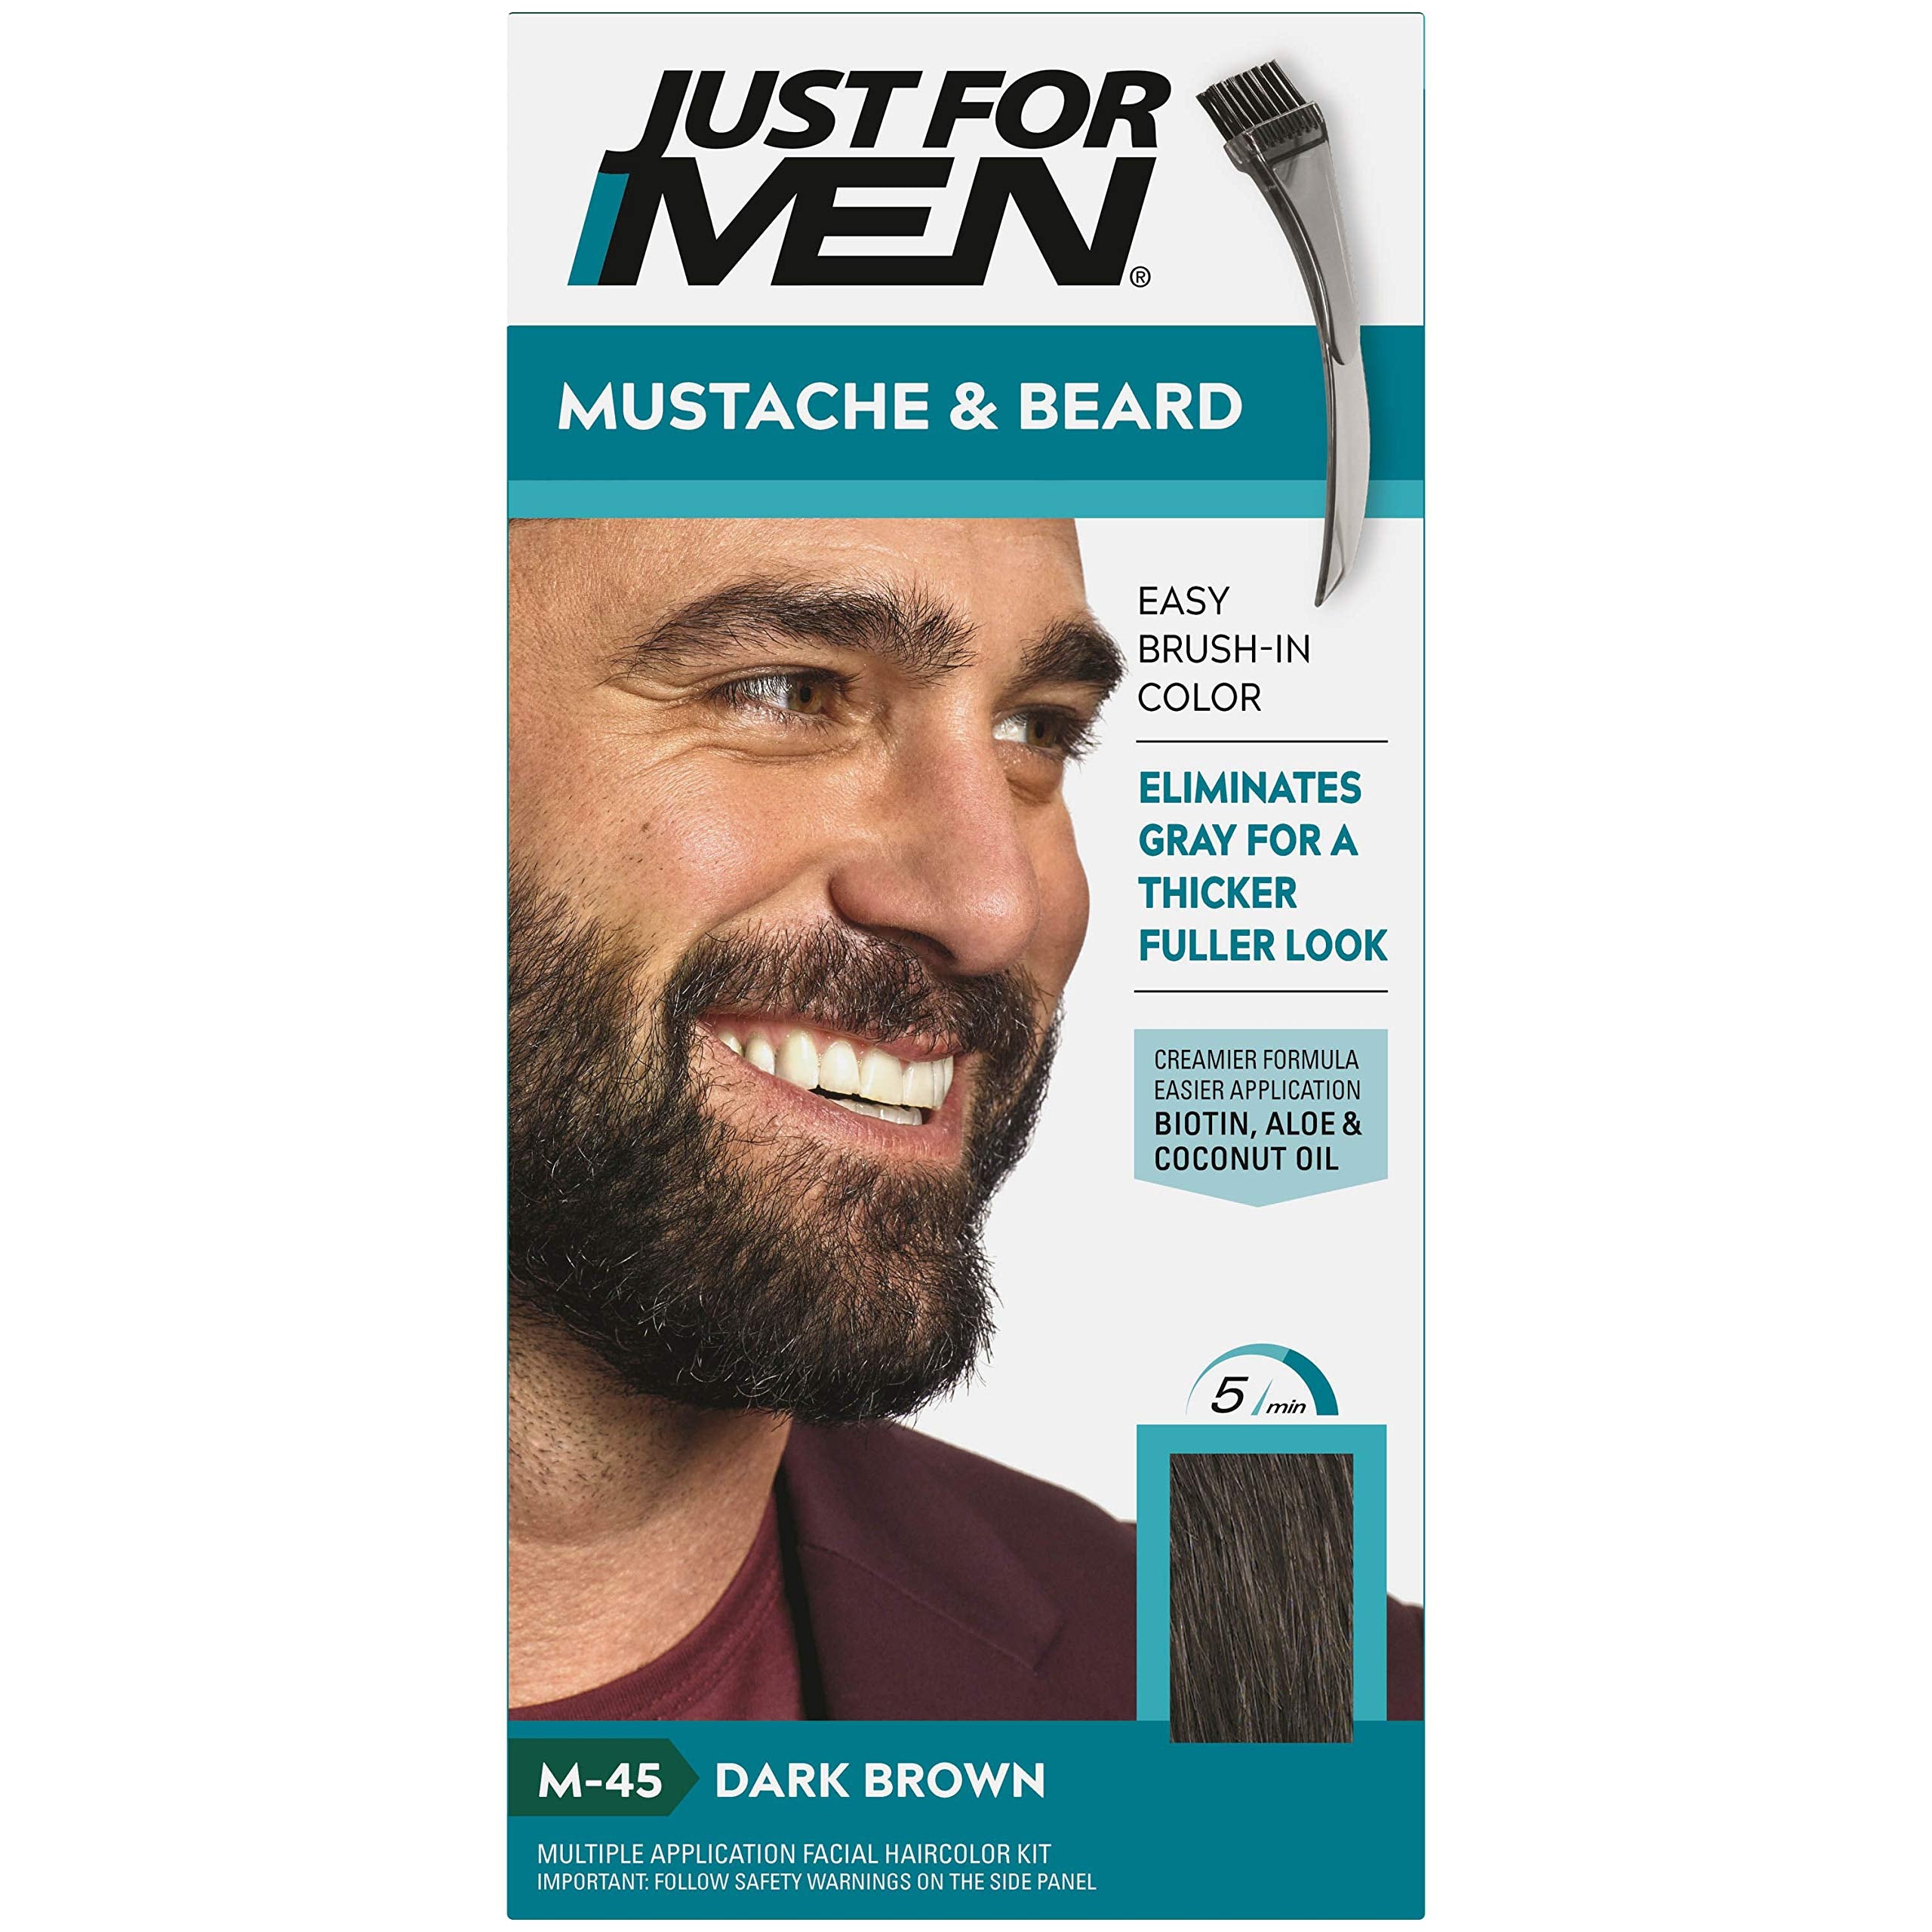 Just for Men Mustache & Beard Color Dark Brown M-45 - 1ct/3pk